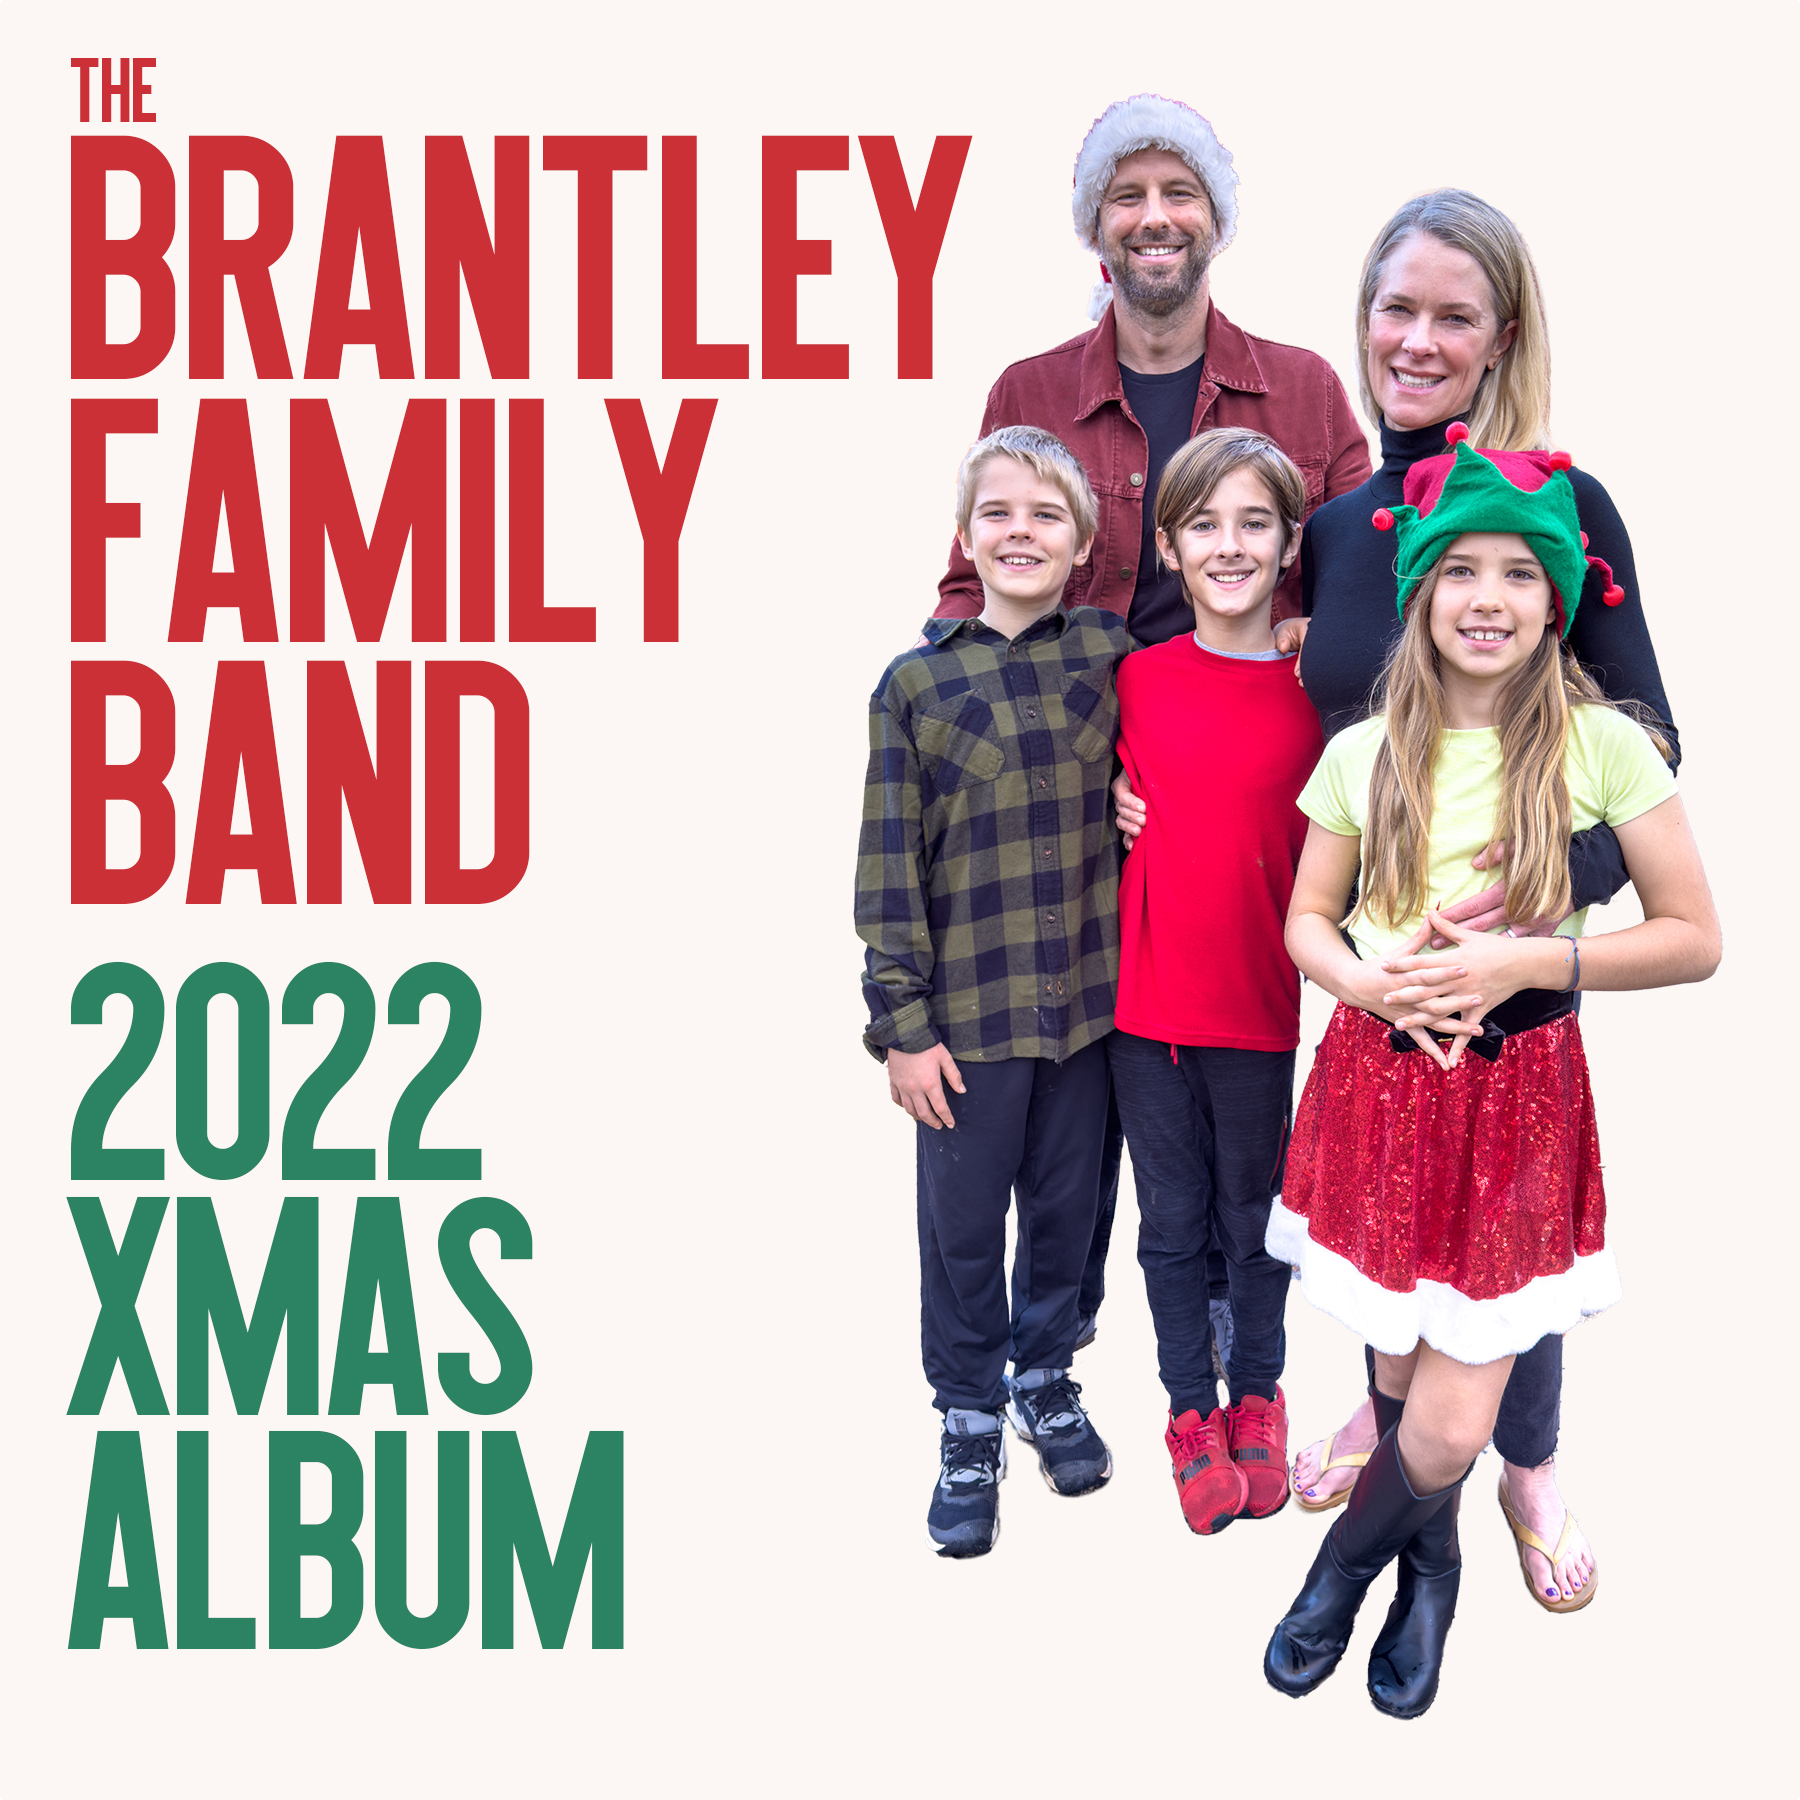 The Brantley Family Band 2022 Xmas Album